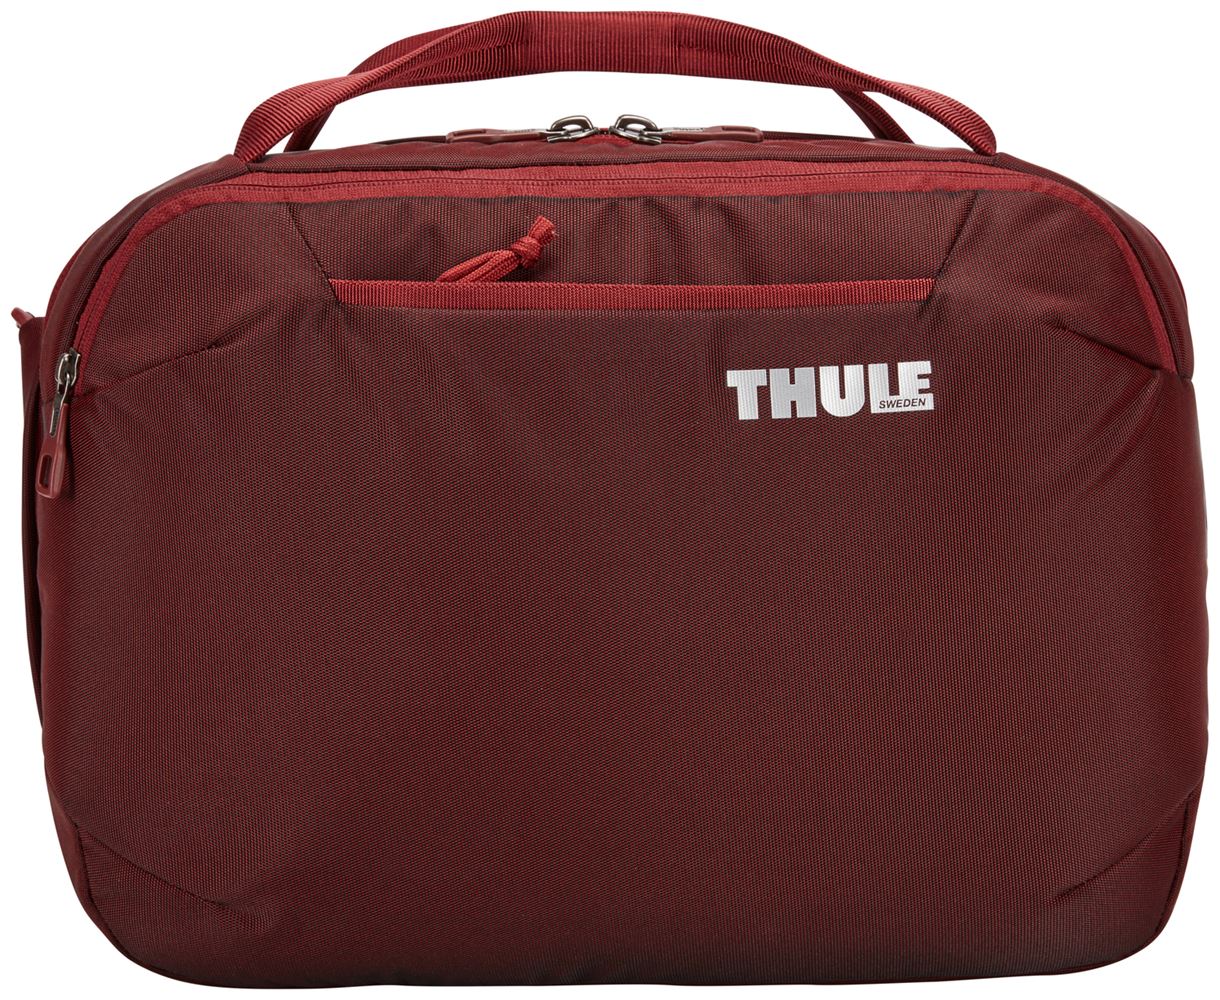 Thule Subterra Boarding Bag